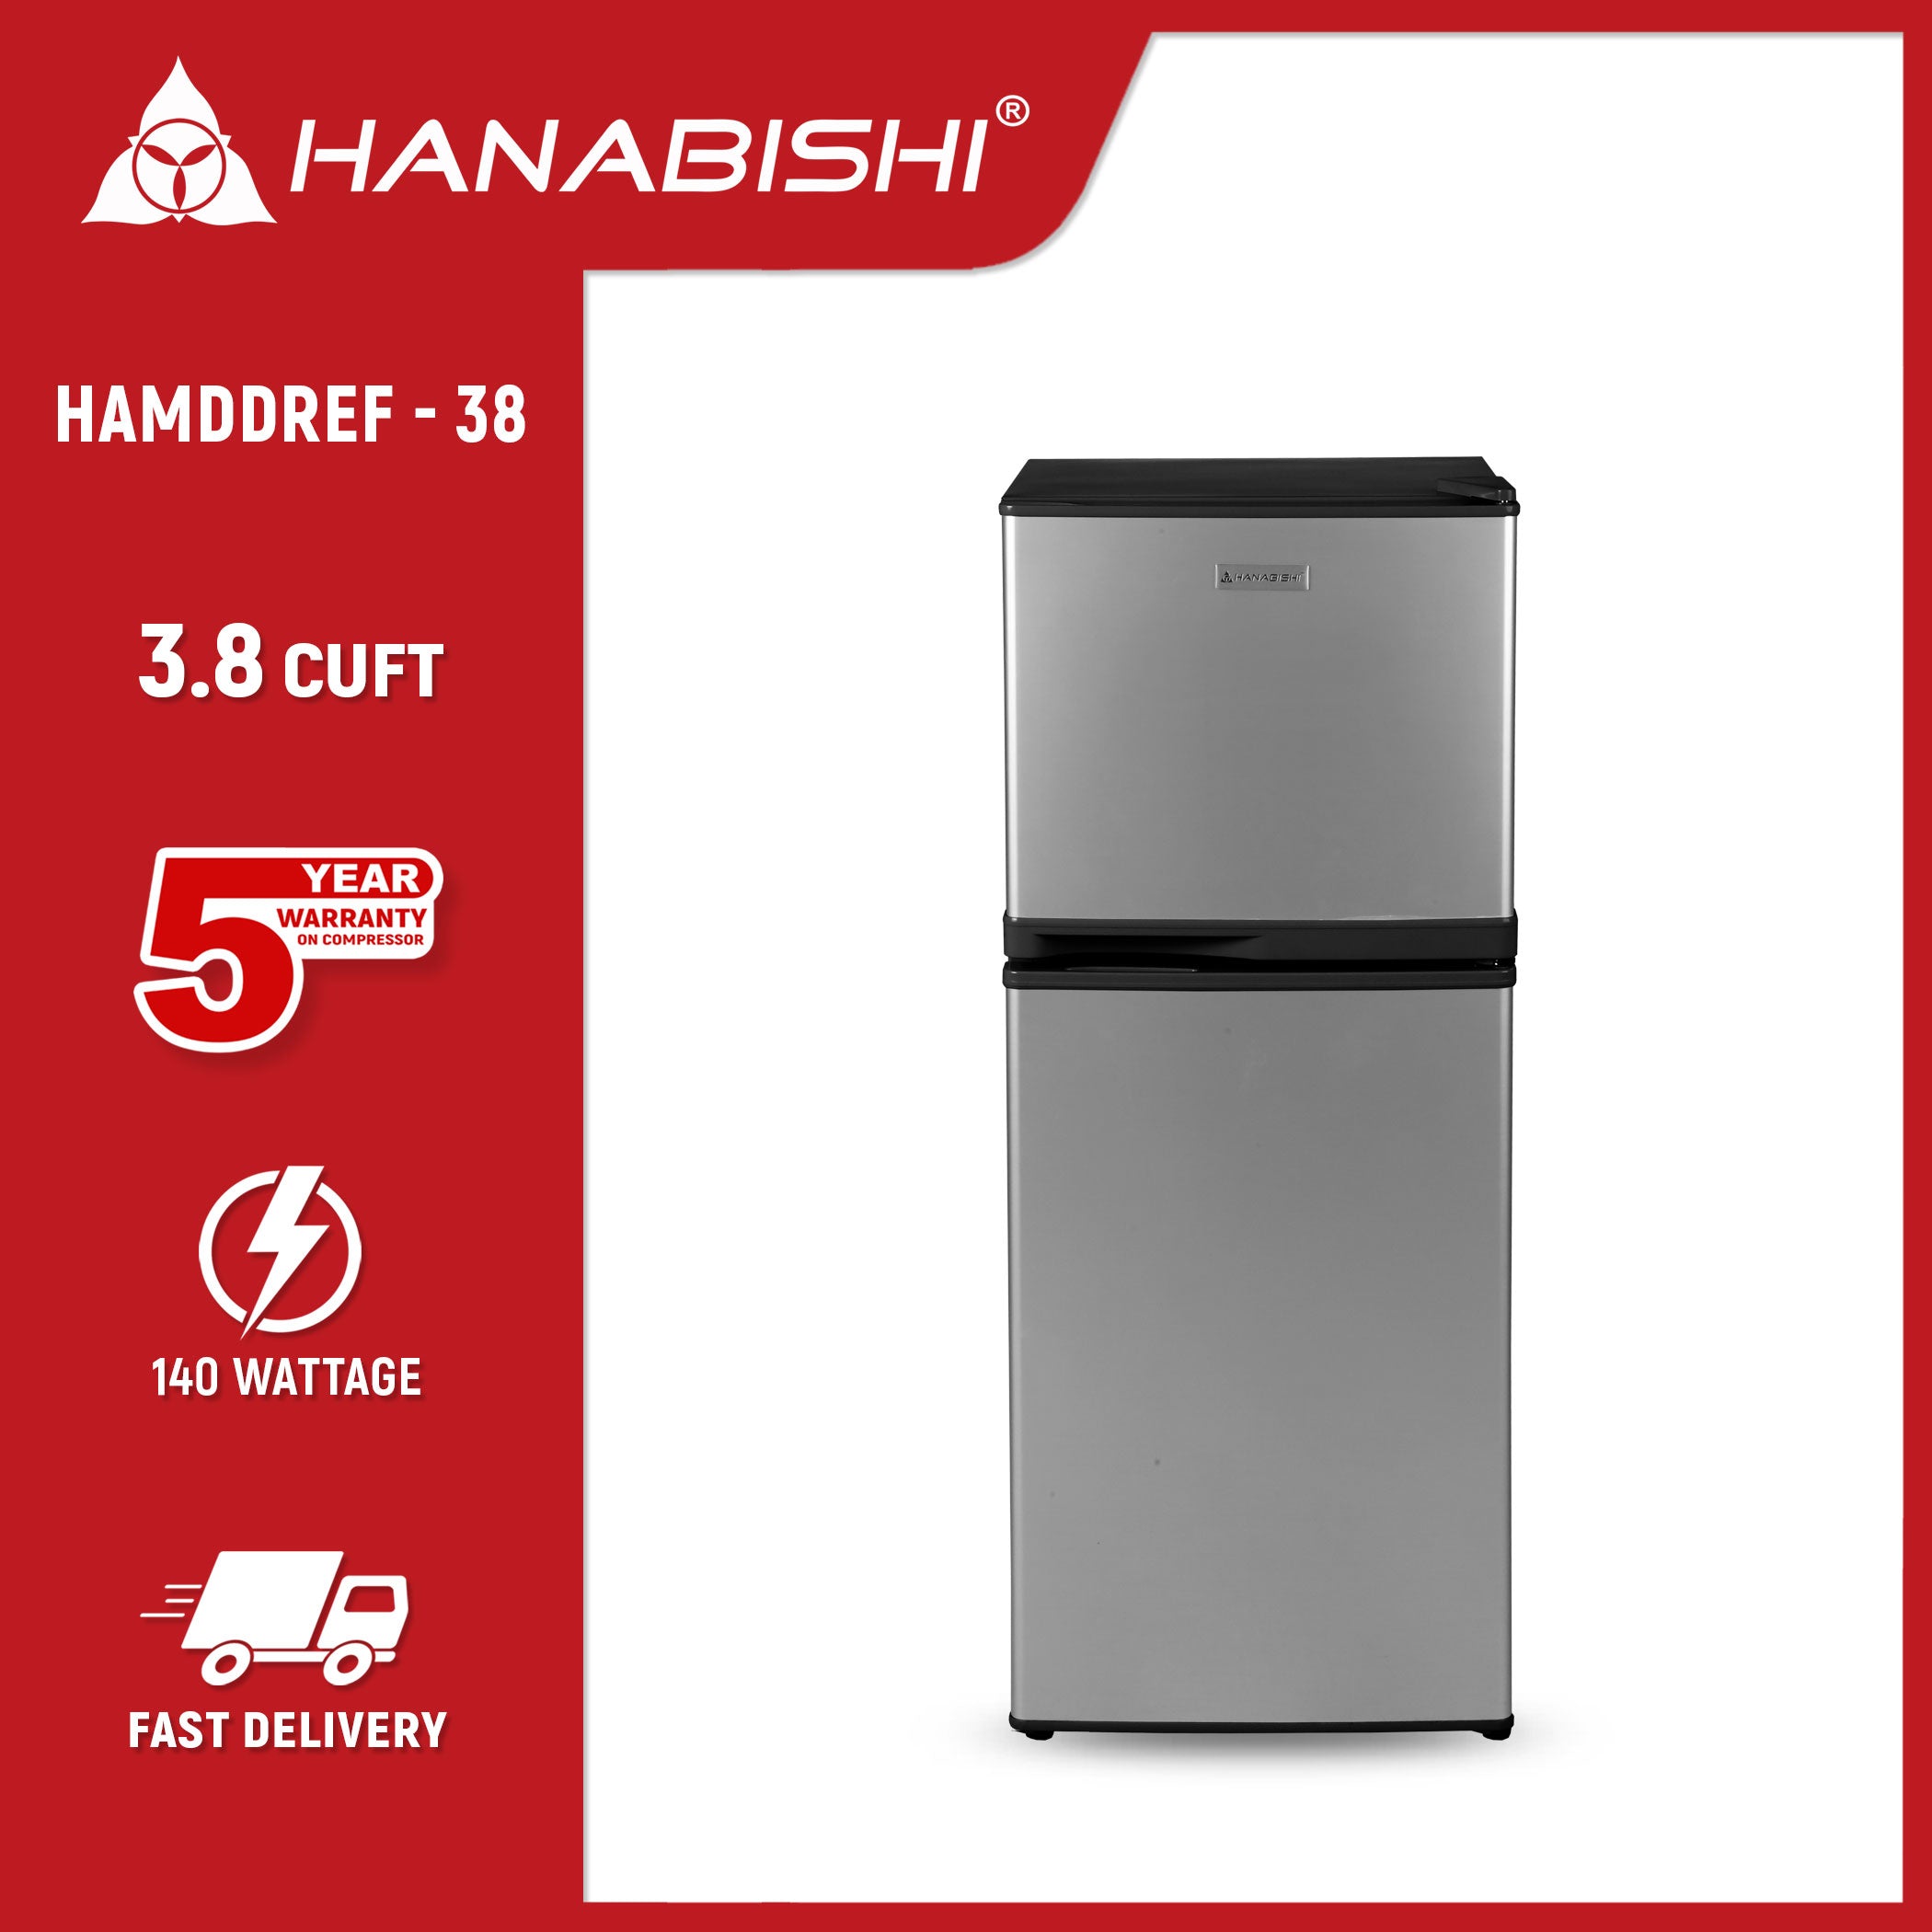 HANABISHI 3.8 cu.ft. Double Door Refrigerator HAMDDREF-38 Hanabishi